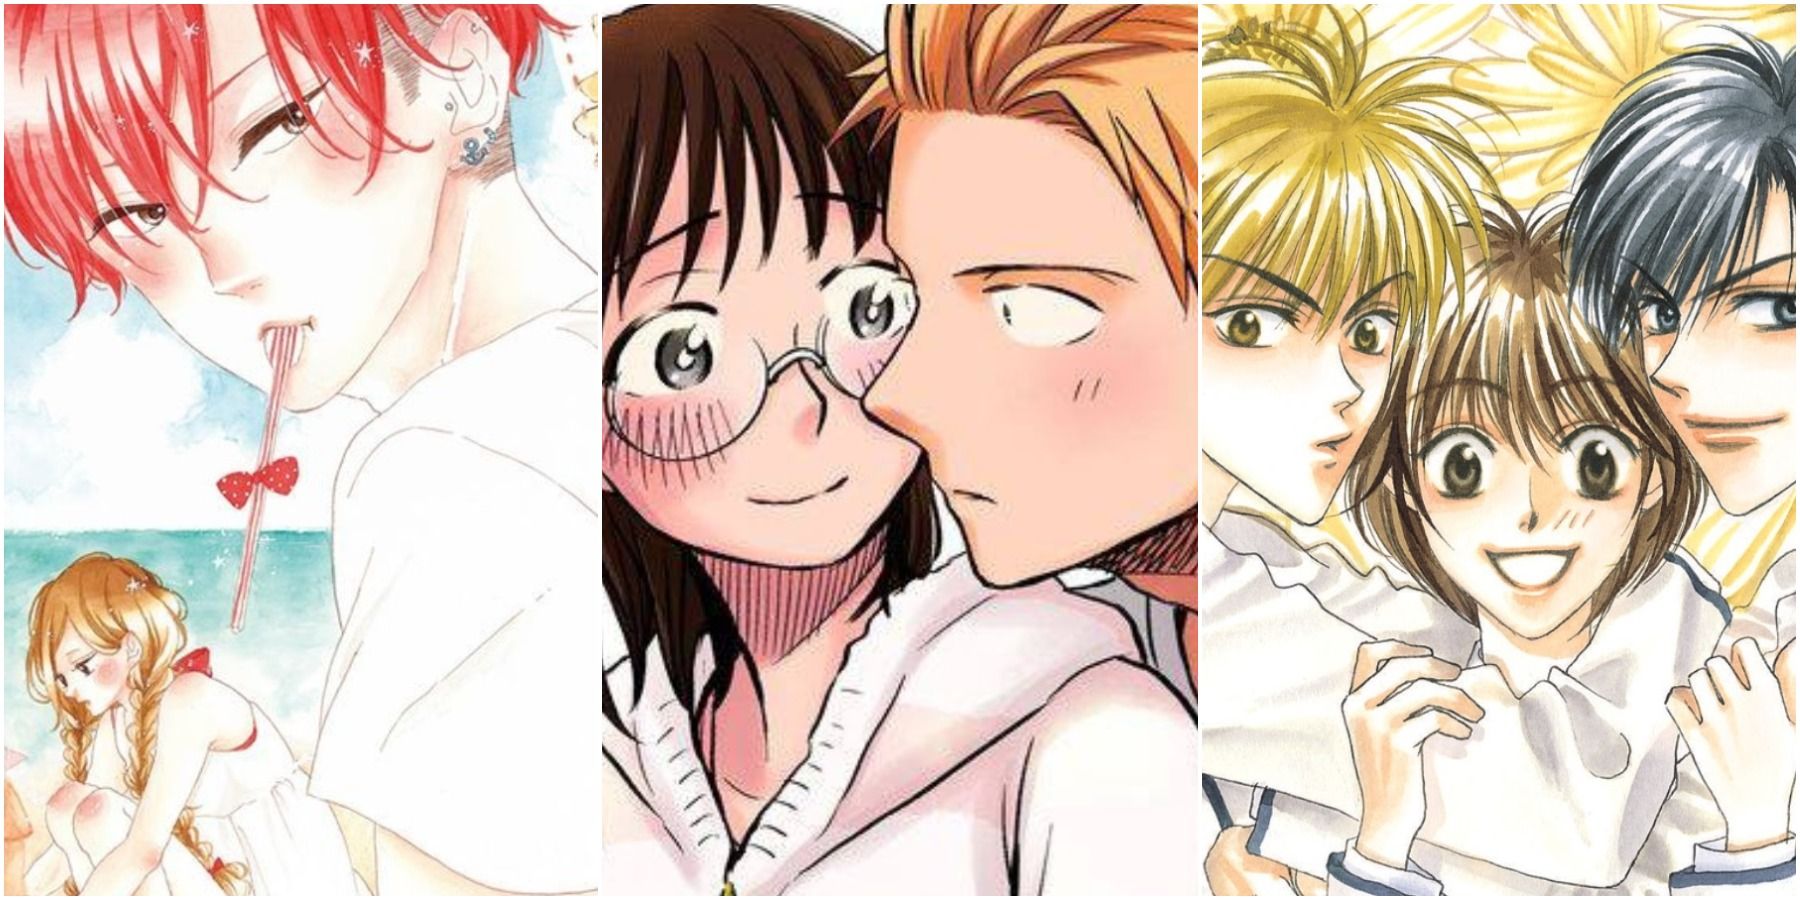 Top 20 Best Romcom Anime Series To Watch